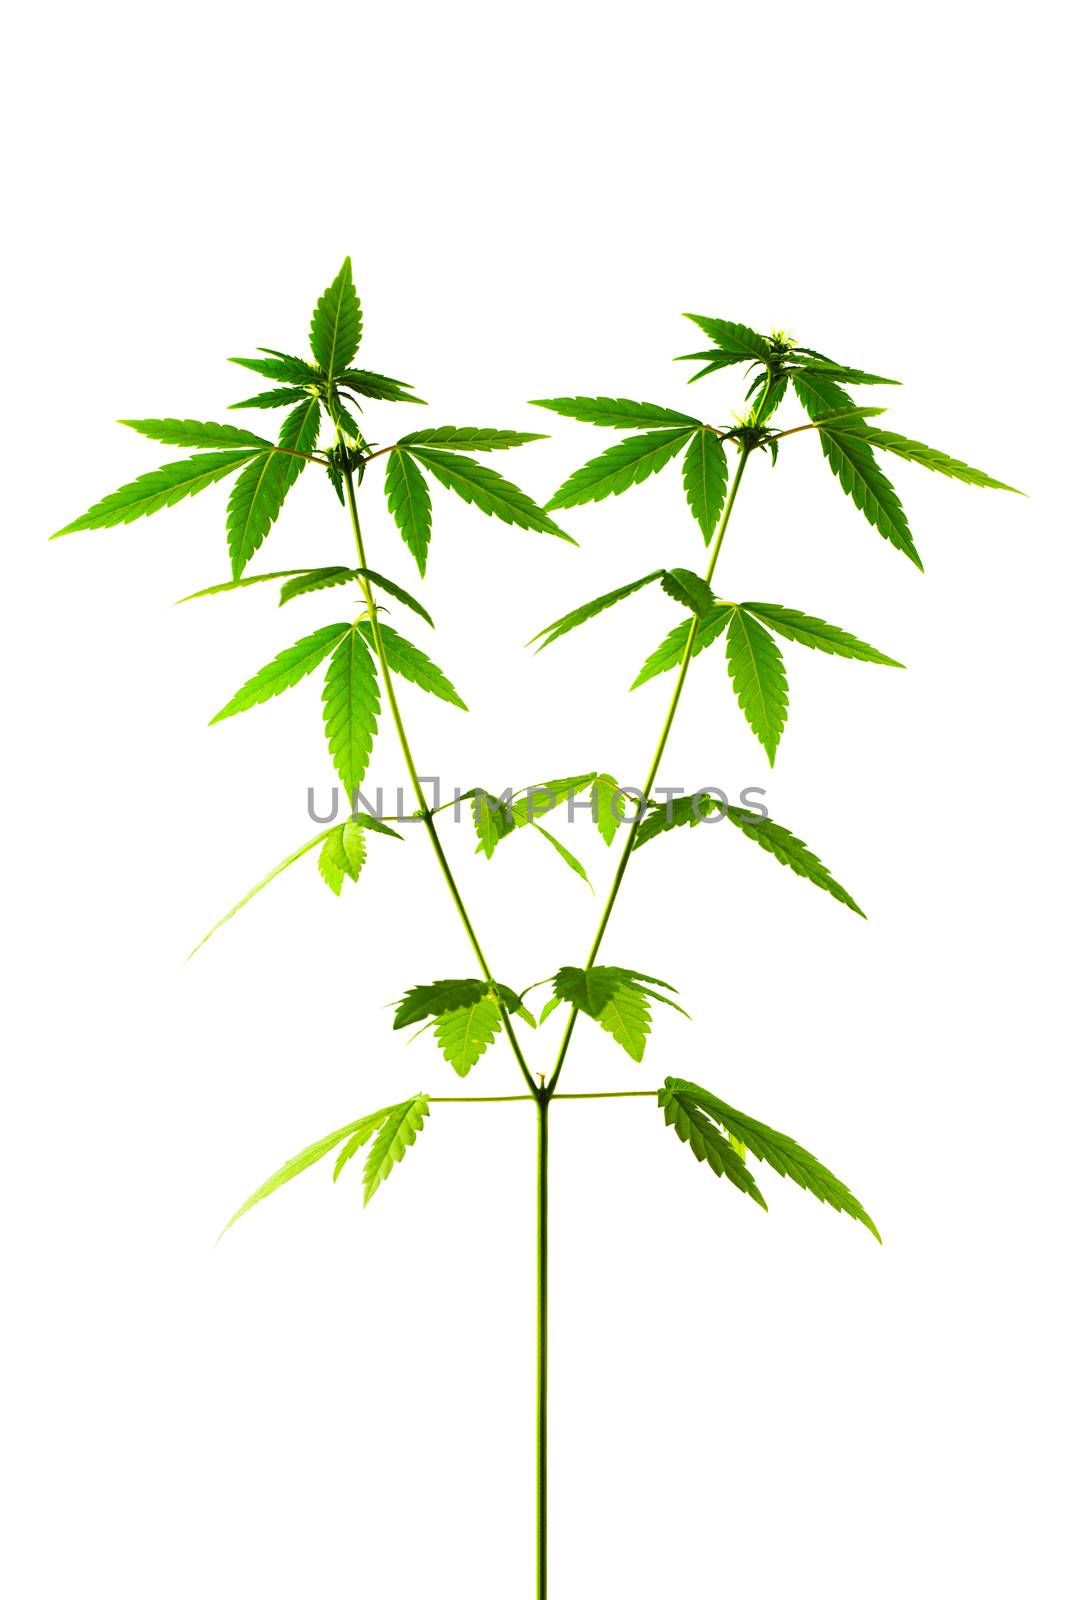 Marijuana plant. female by kokimk